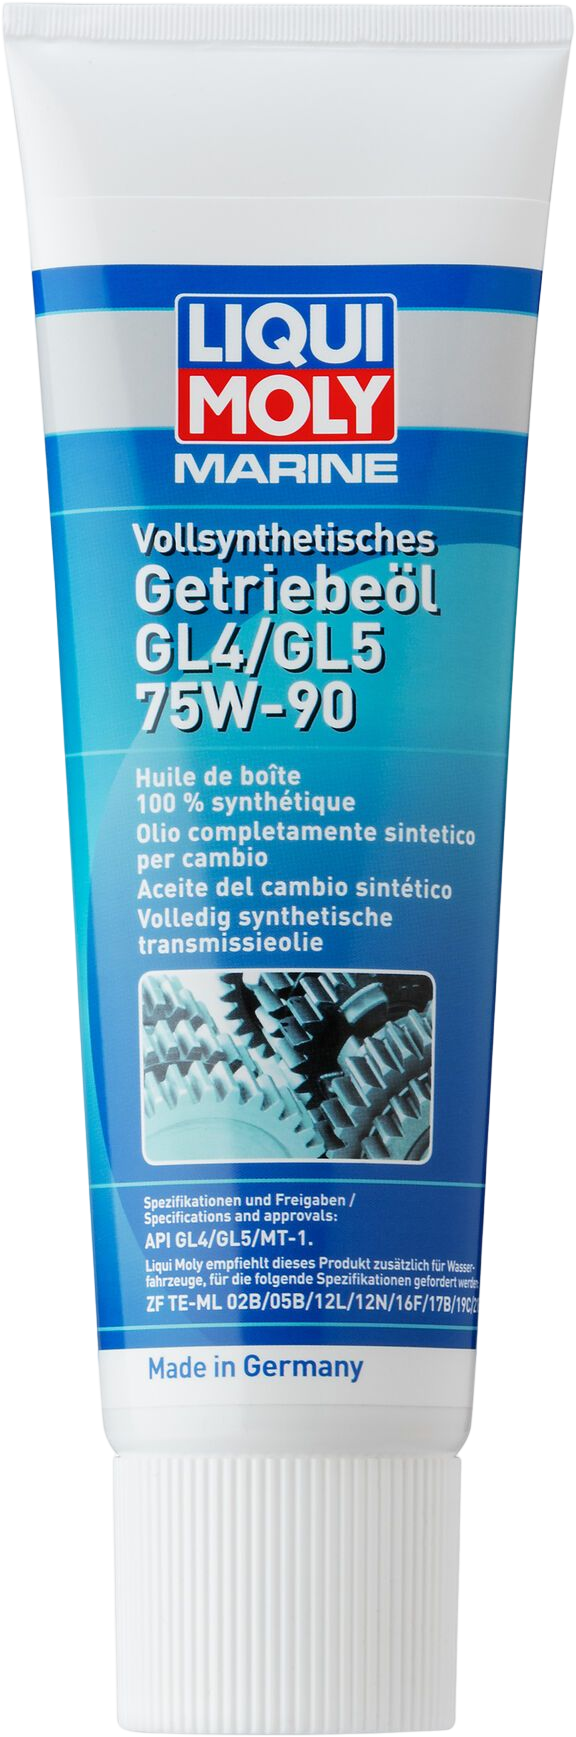 Liqui Moly Marine Volledig synthetische transmissieolie GL4/GL5 75W-90, 12 x 250 ml detail 2